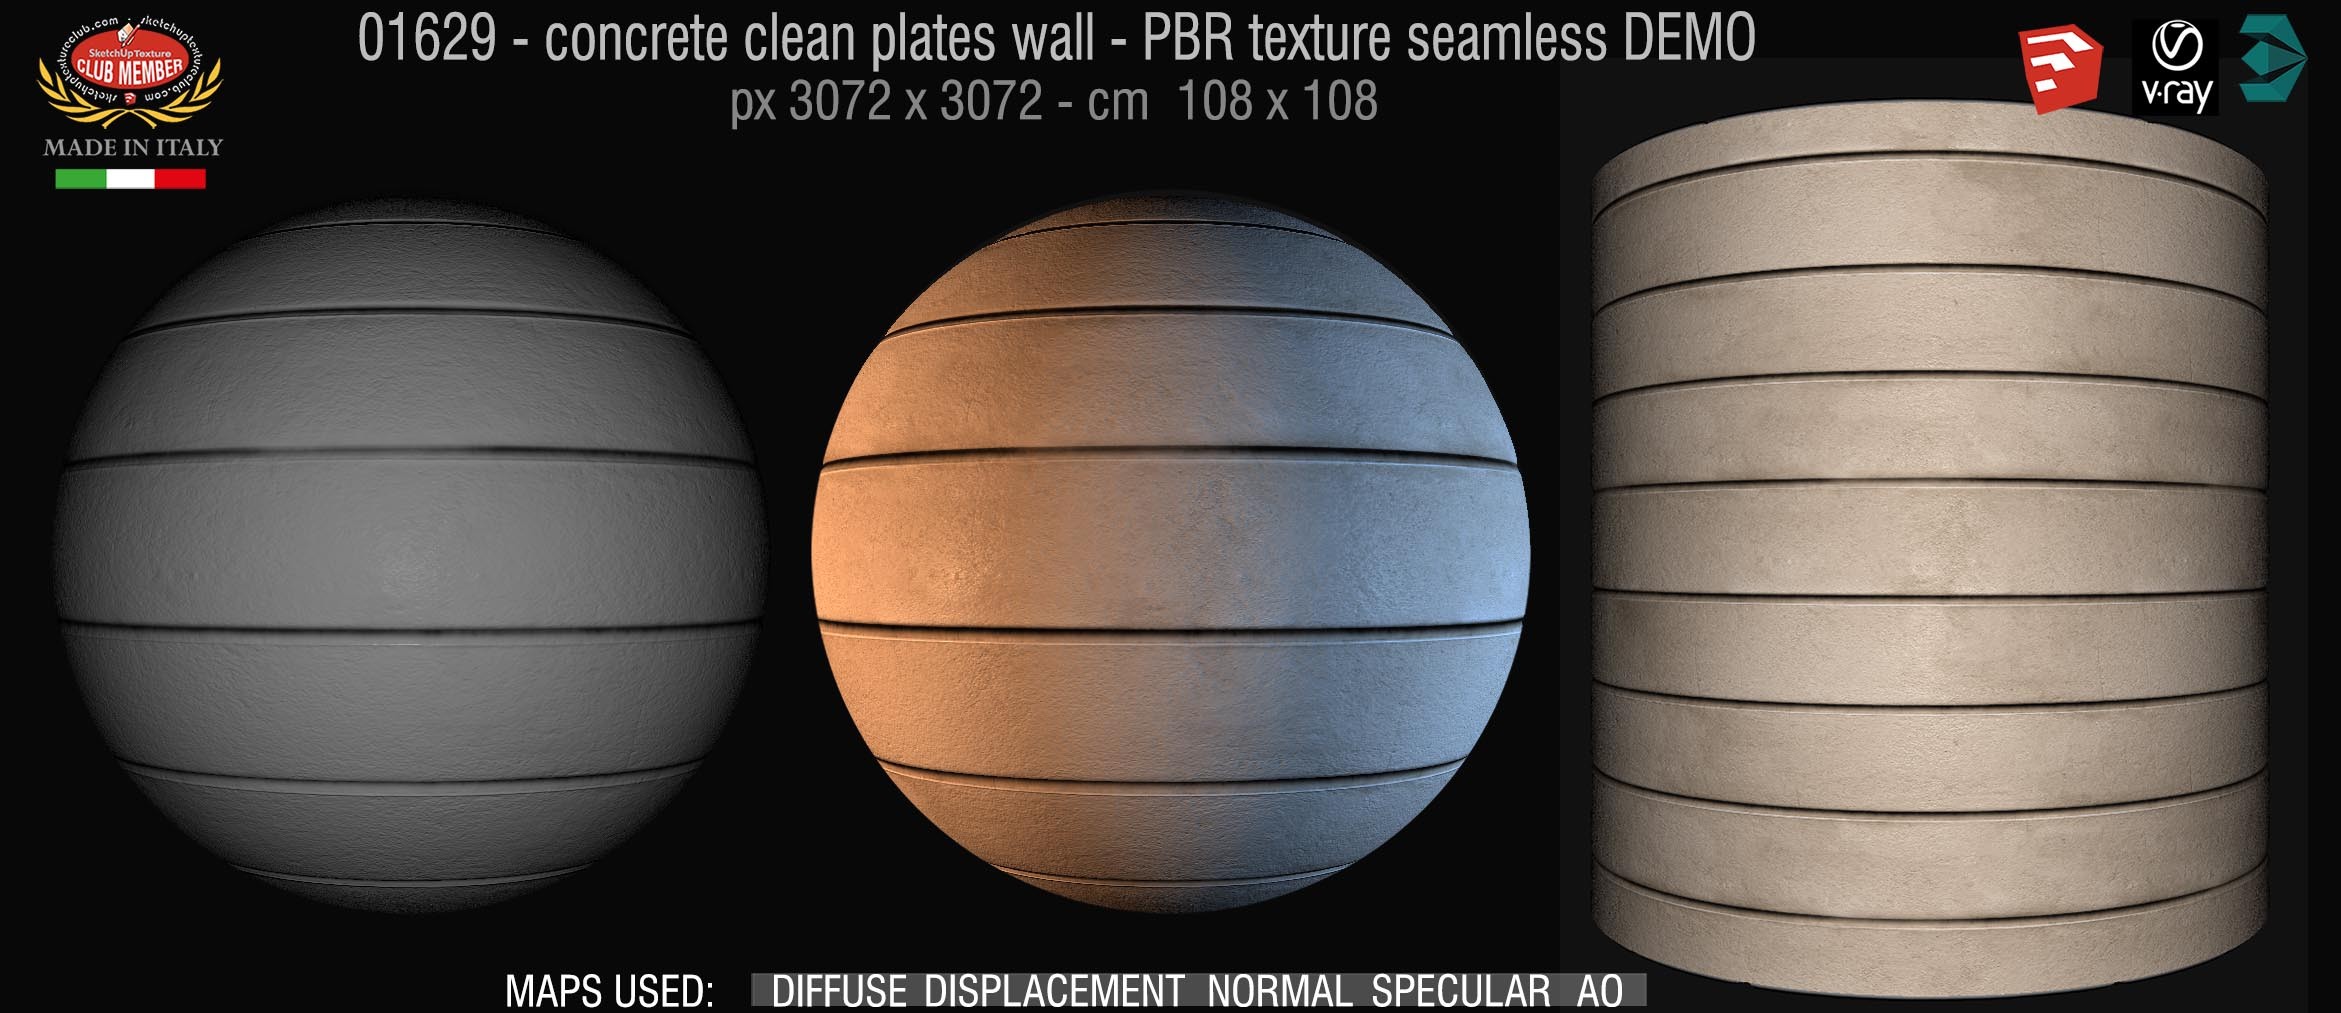 01629 concrete clean plates wall PBR texture seamless DEMO